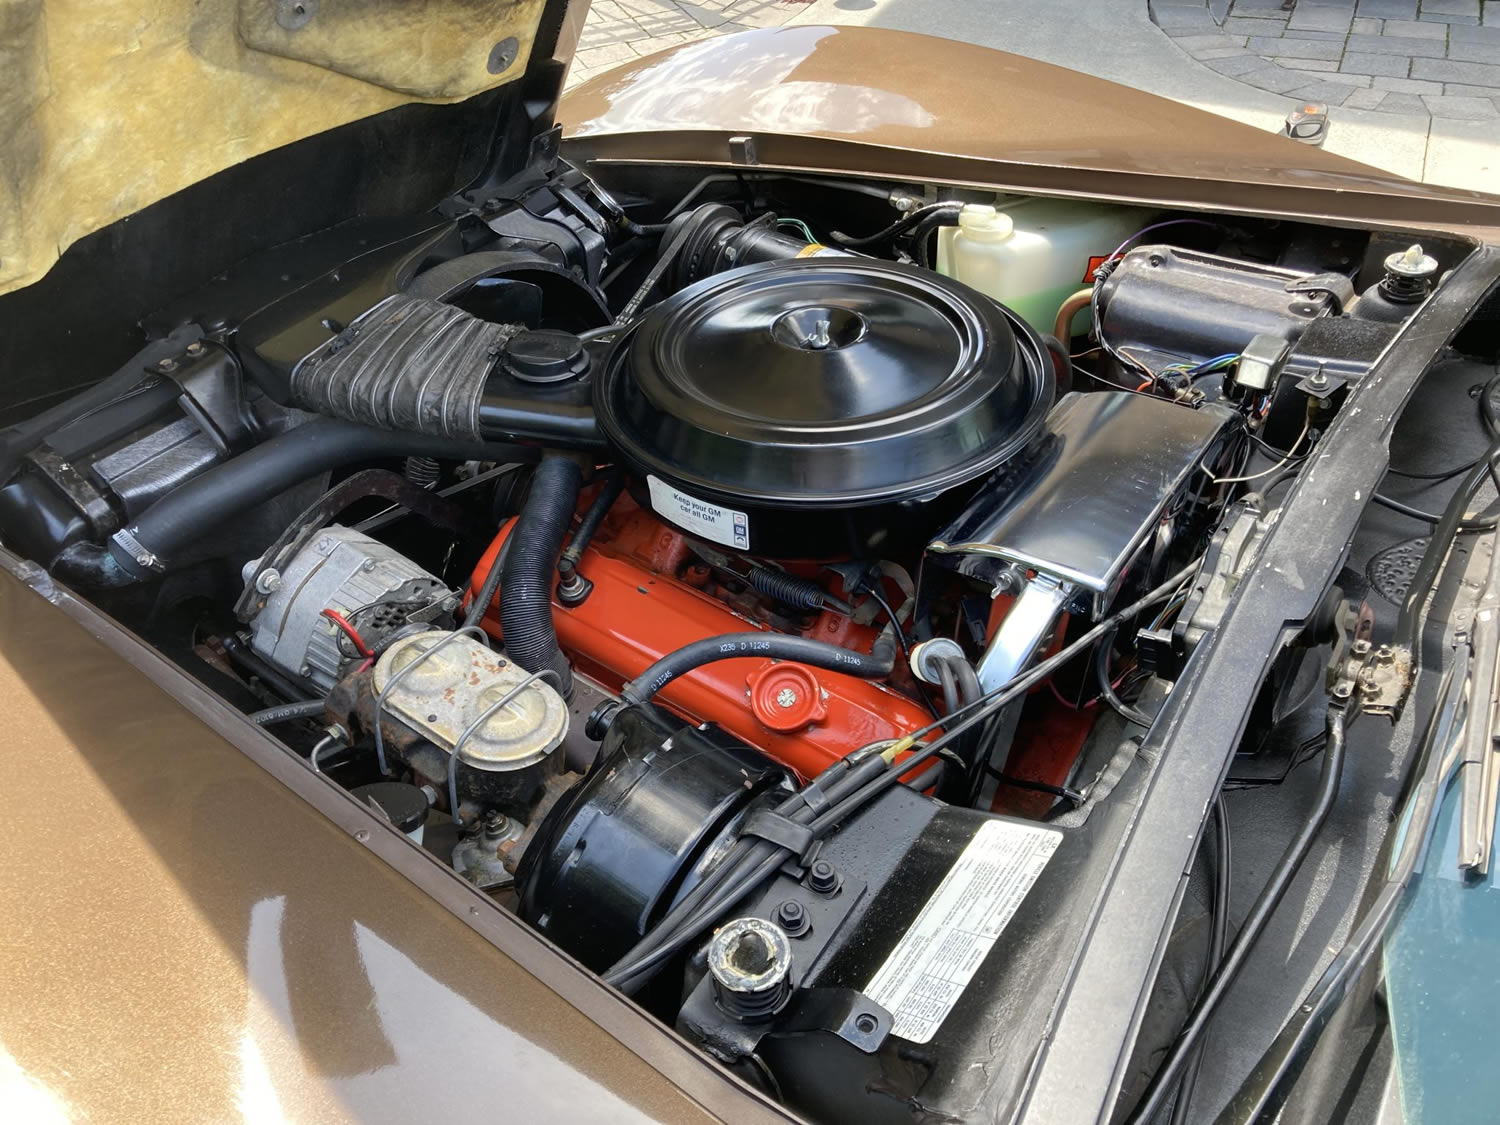 1976 Corvette in Dark Brown Metallic